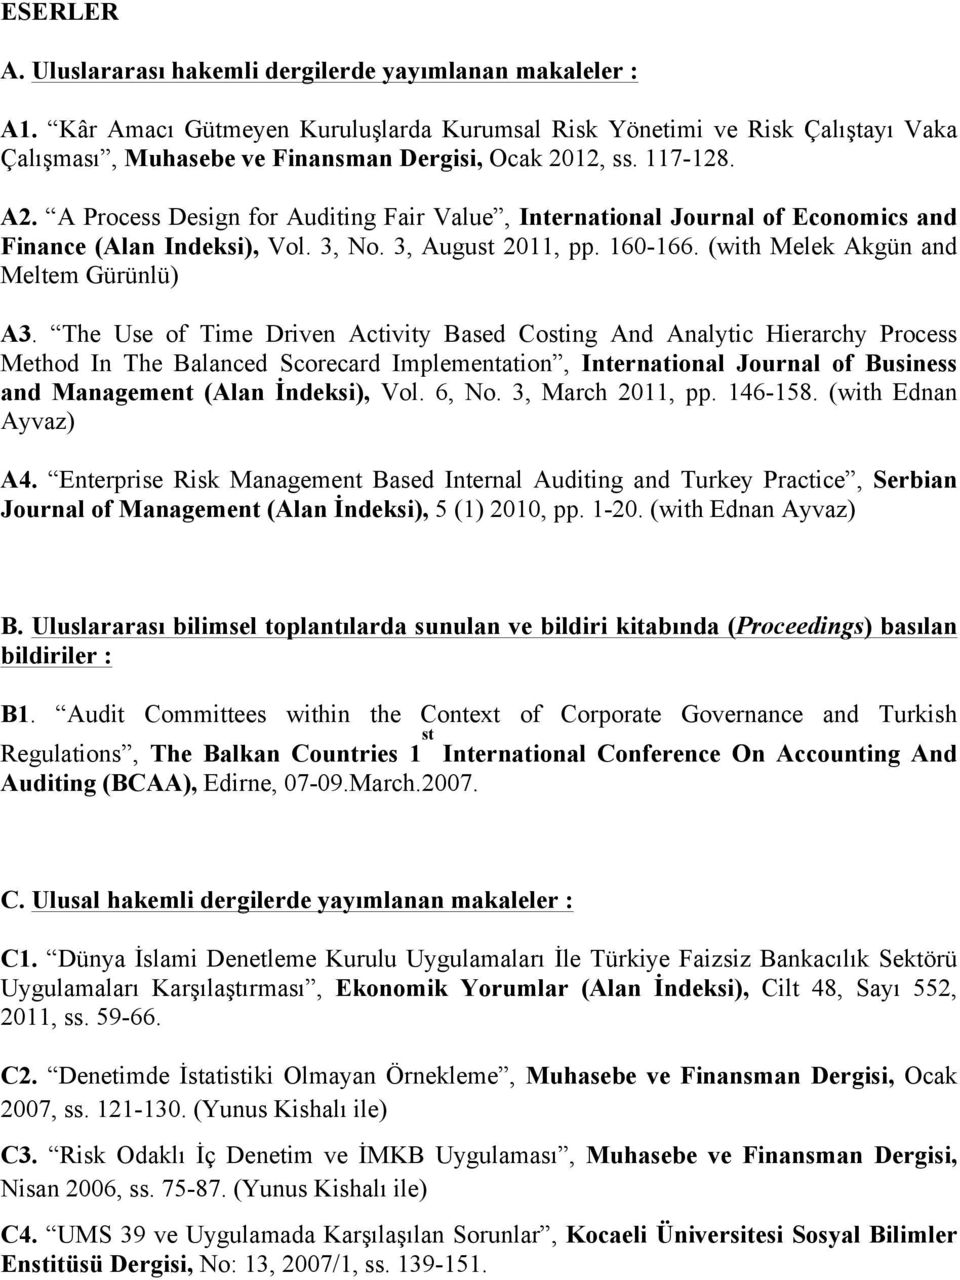 A Process Design for Auditing Fair Value, International Journal of Economics and Finance (Alan Indeksi), Vol. 3, No. 3, August 2011, pp. 160-166. (with Melek Akgün and Meltem Gürünlü) A3.